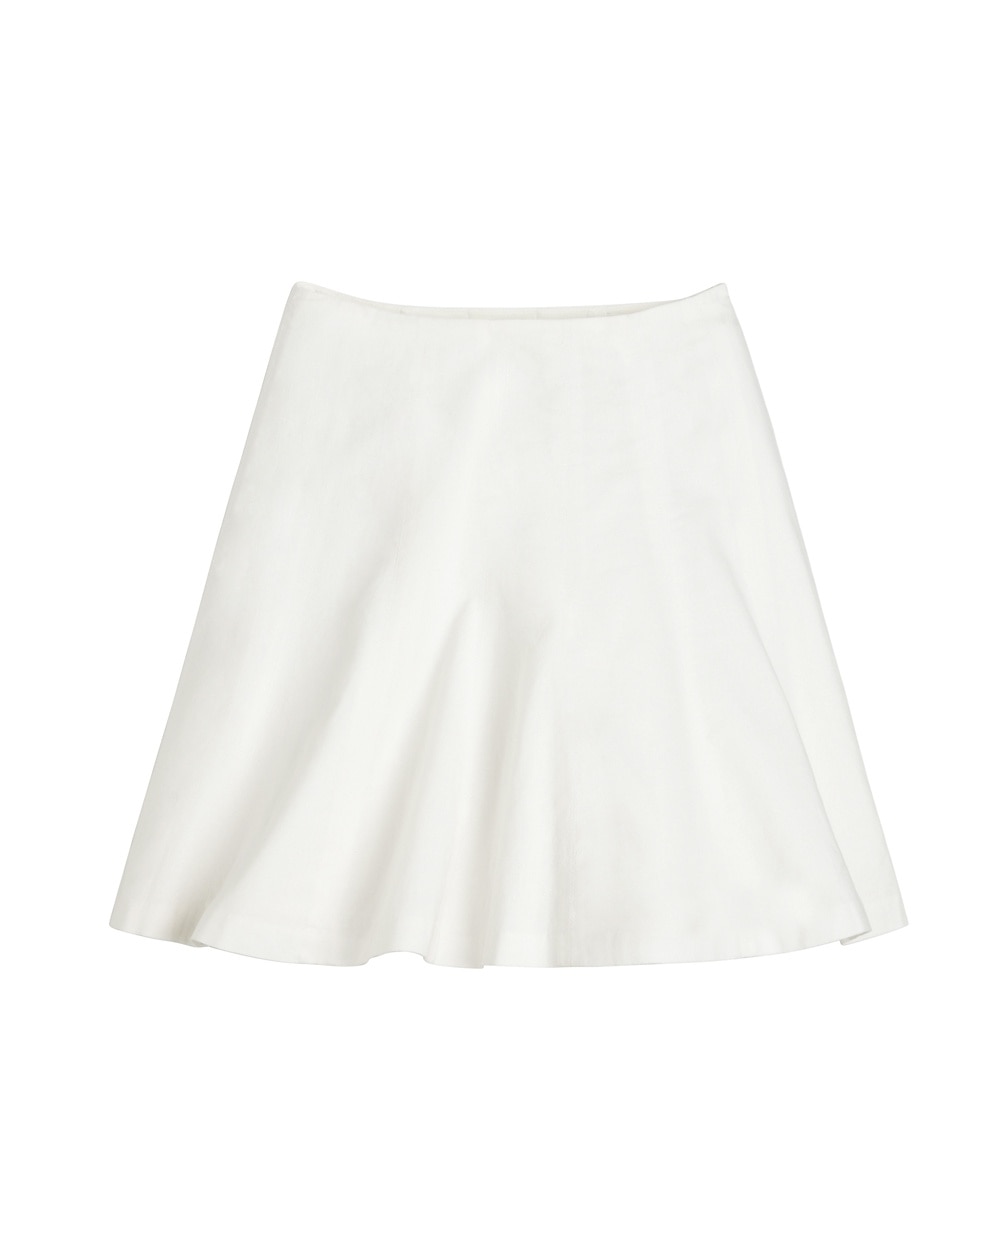 Linen White Flirty Skirt - Shop Women's Skirts - Pencil and Petite ...